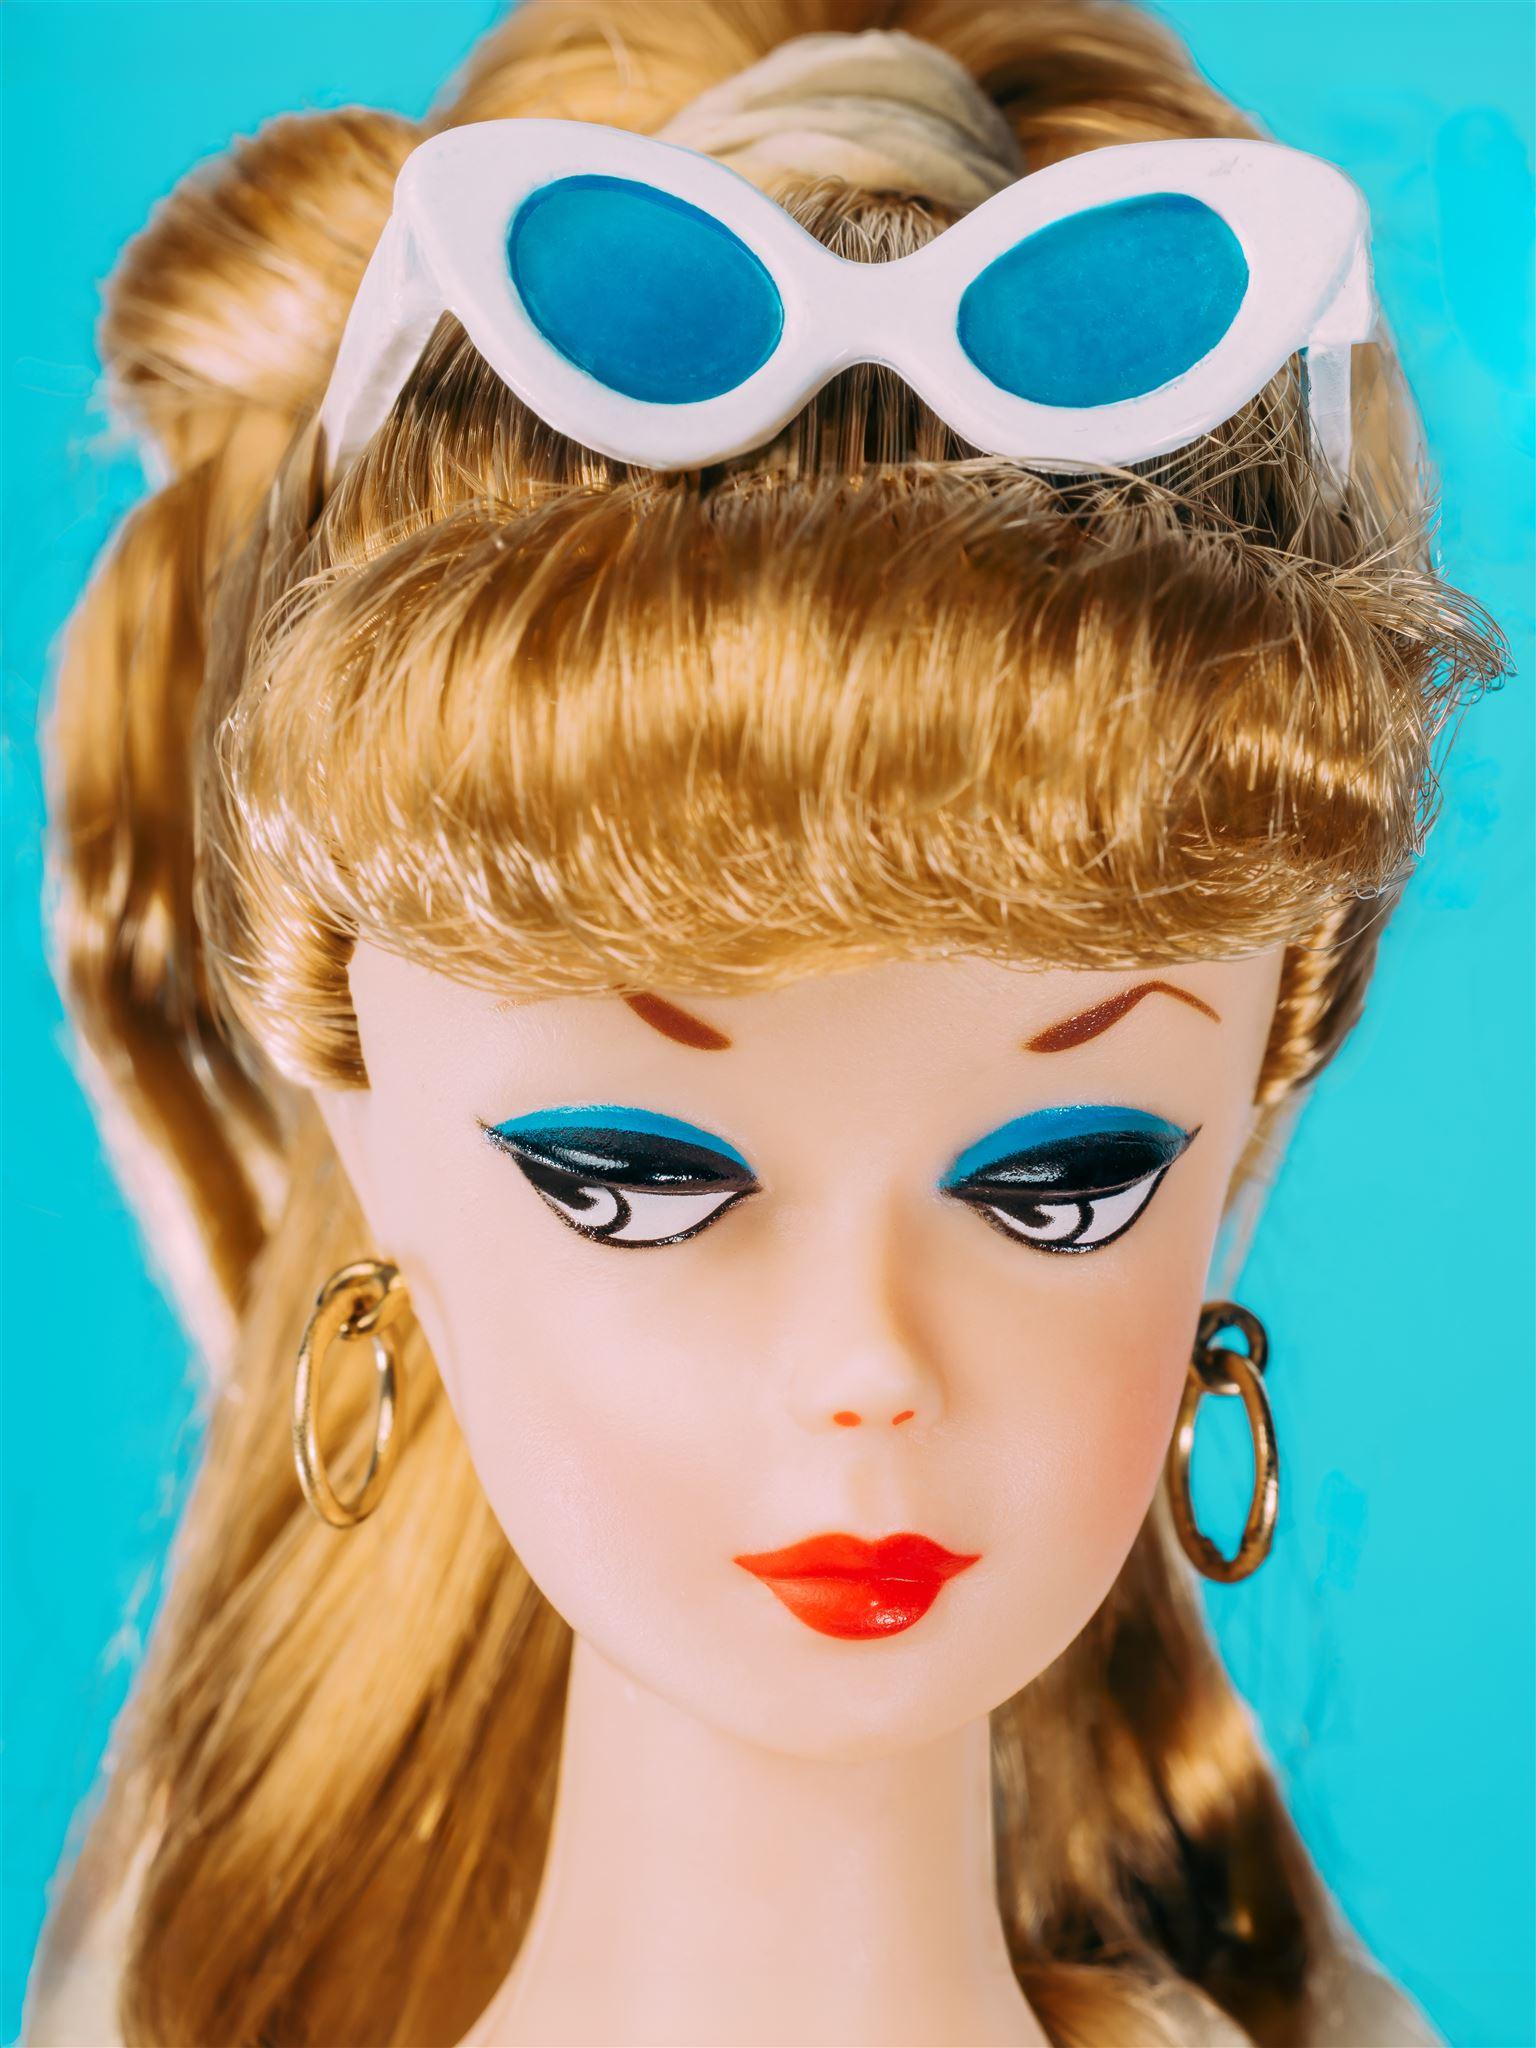 Ryan O'Donoghue Figurative Photograph - Plastic Head: 35th Anniversary Barbie Doll, rare, vintage, collectable, comic